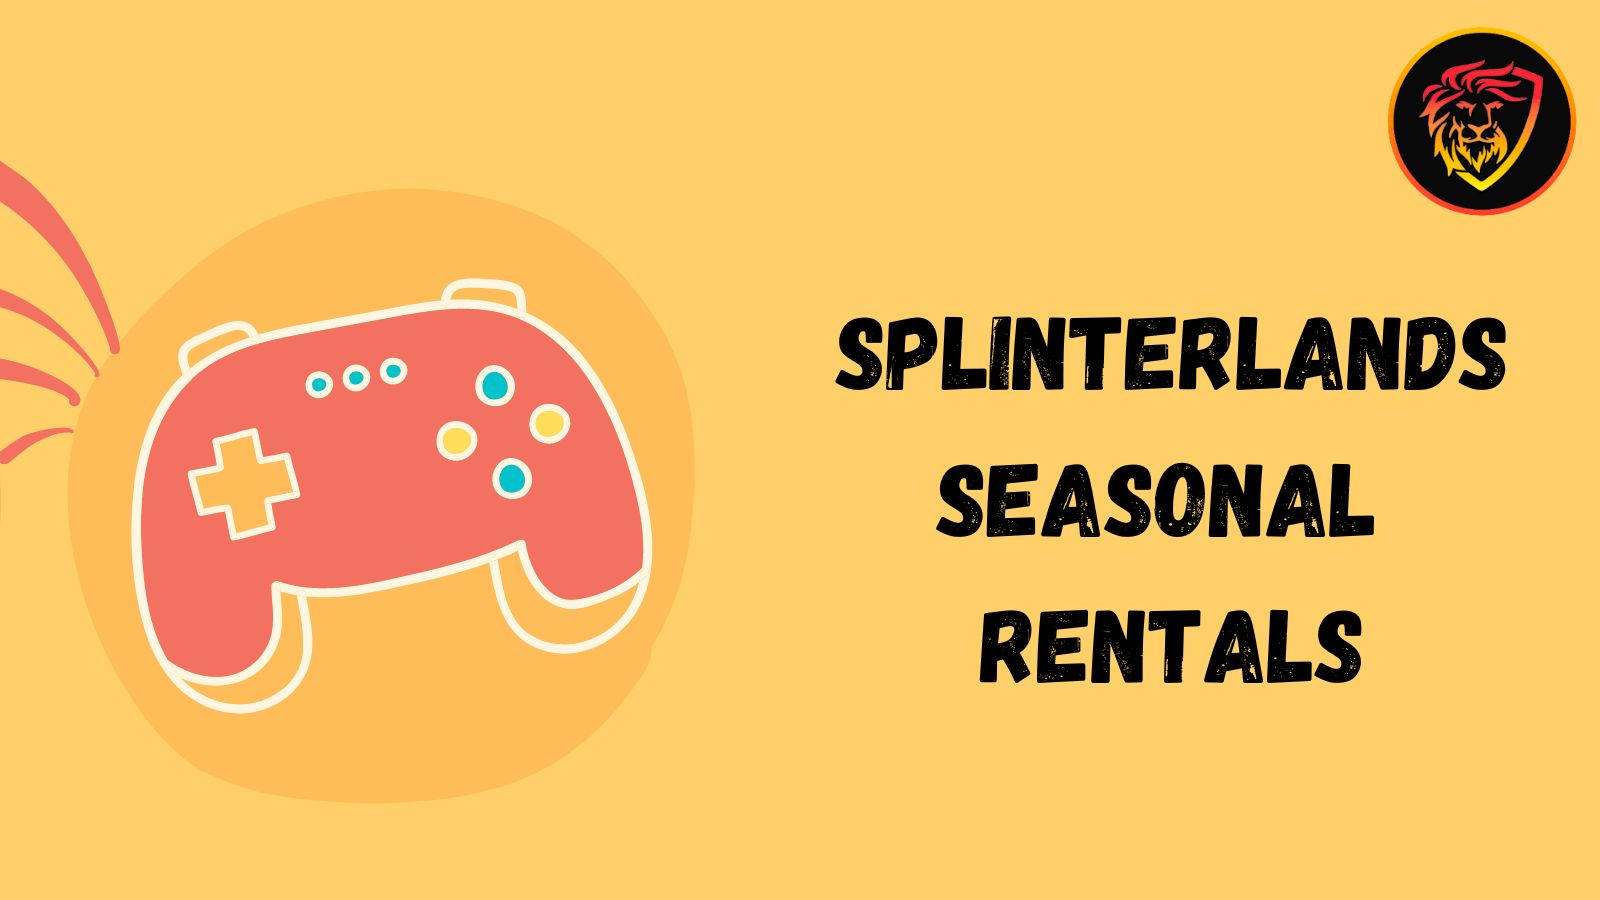 splinterlands seasonal rentals.jpg